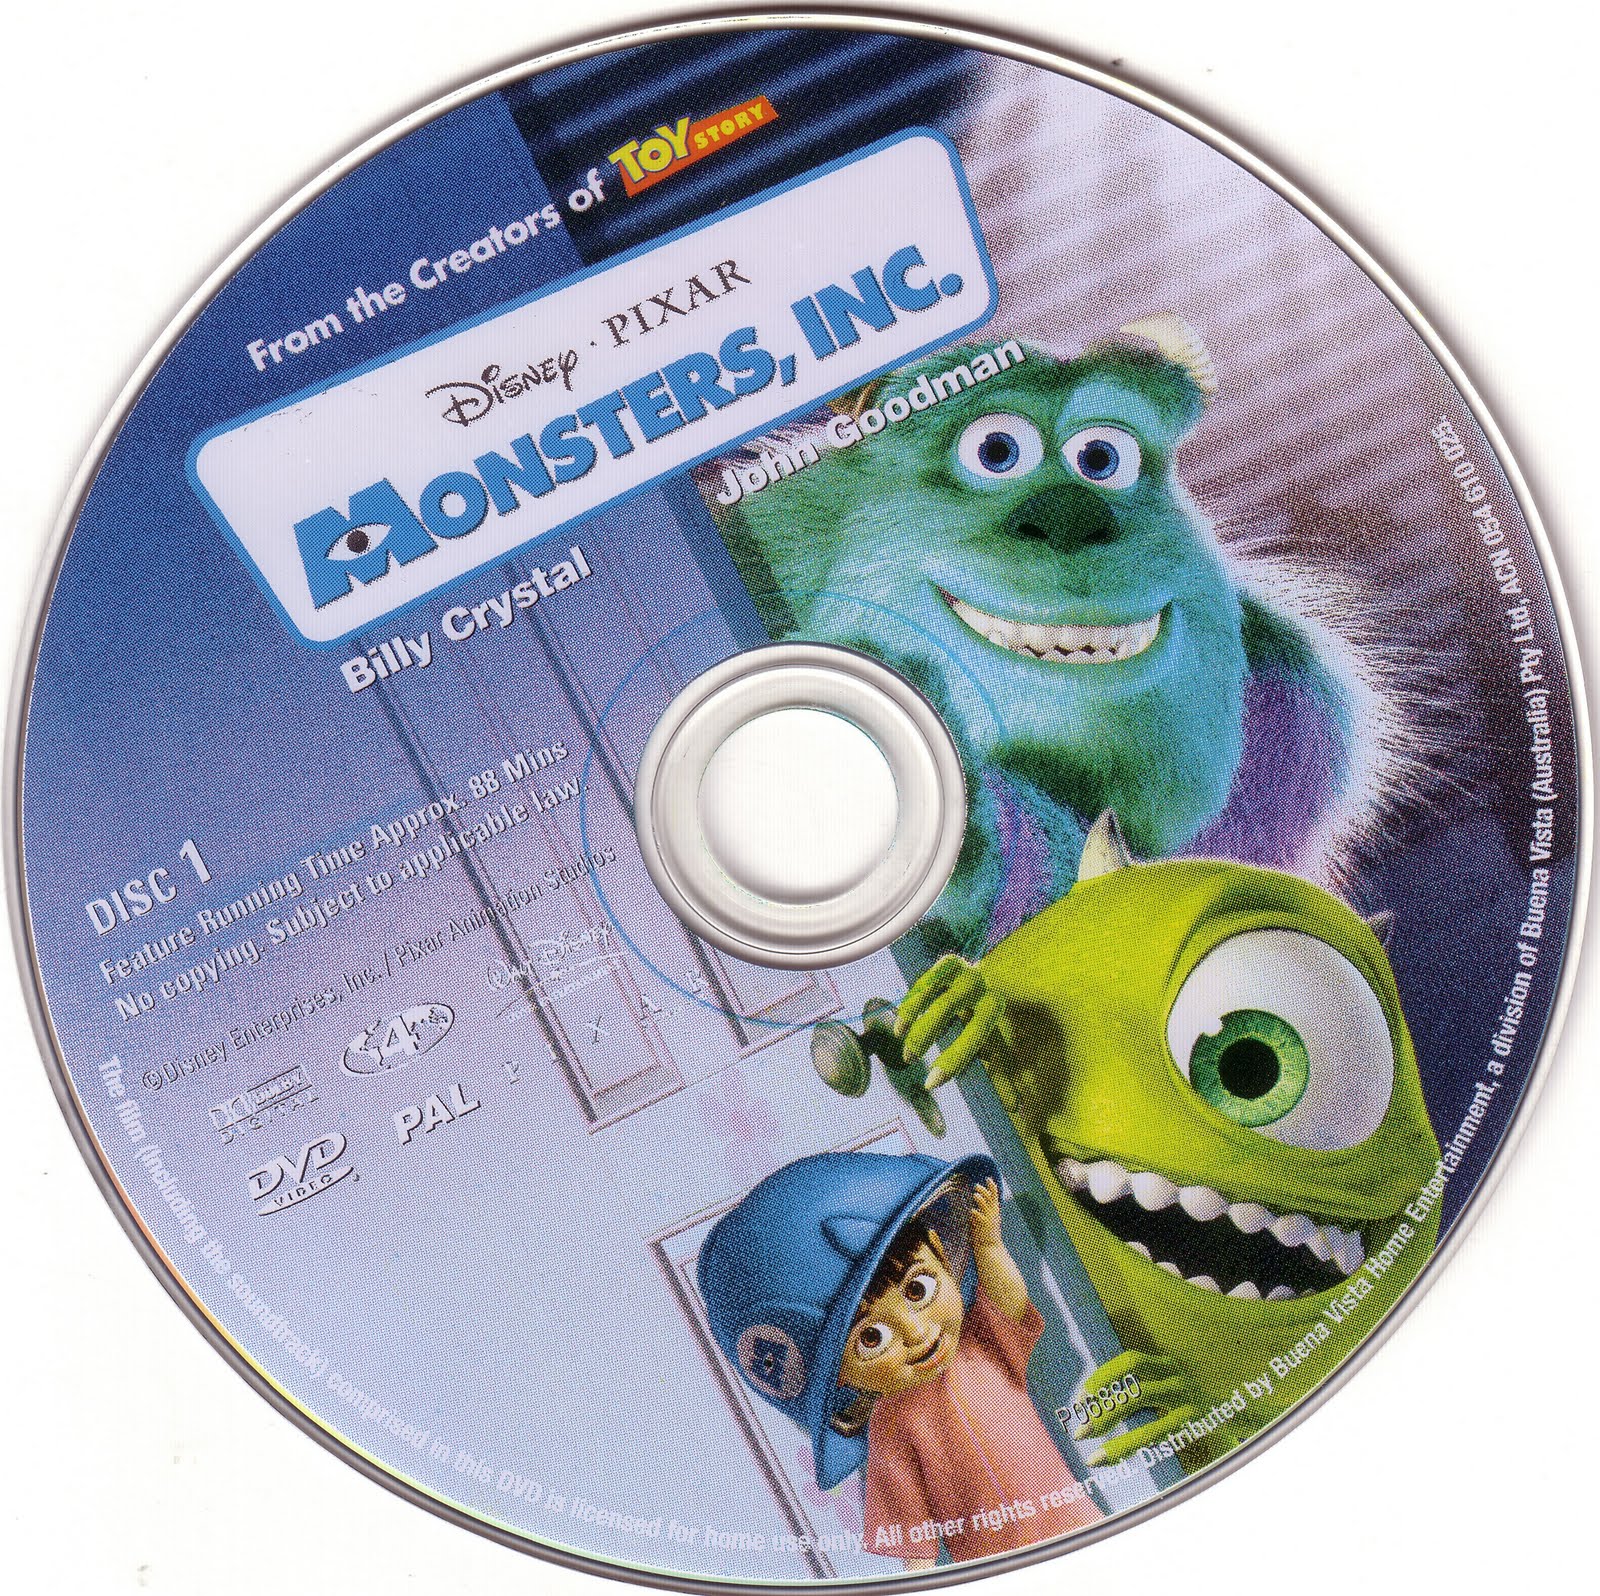 Monsters Inc Dvd Menu Disc 1